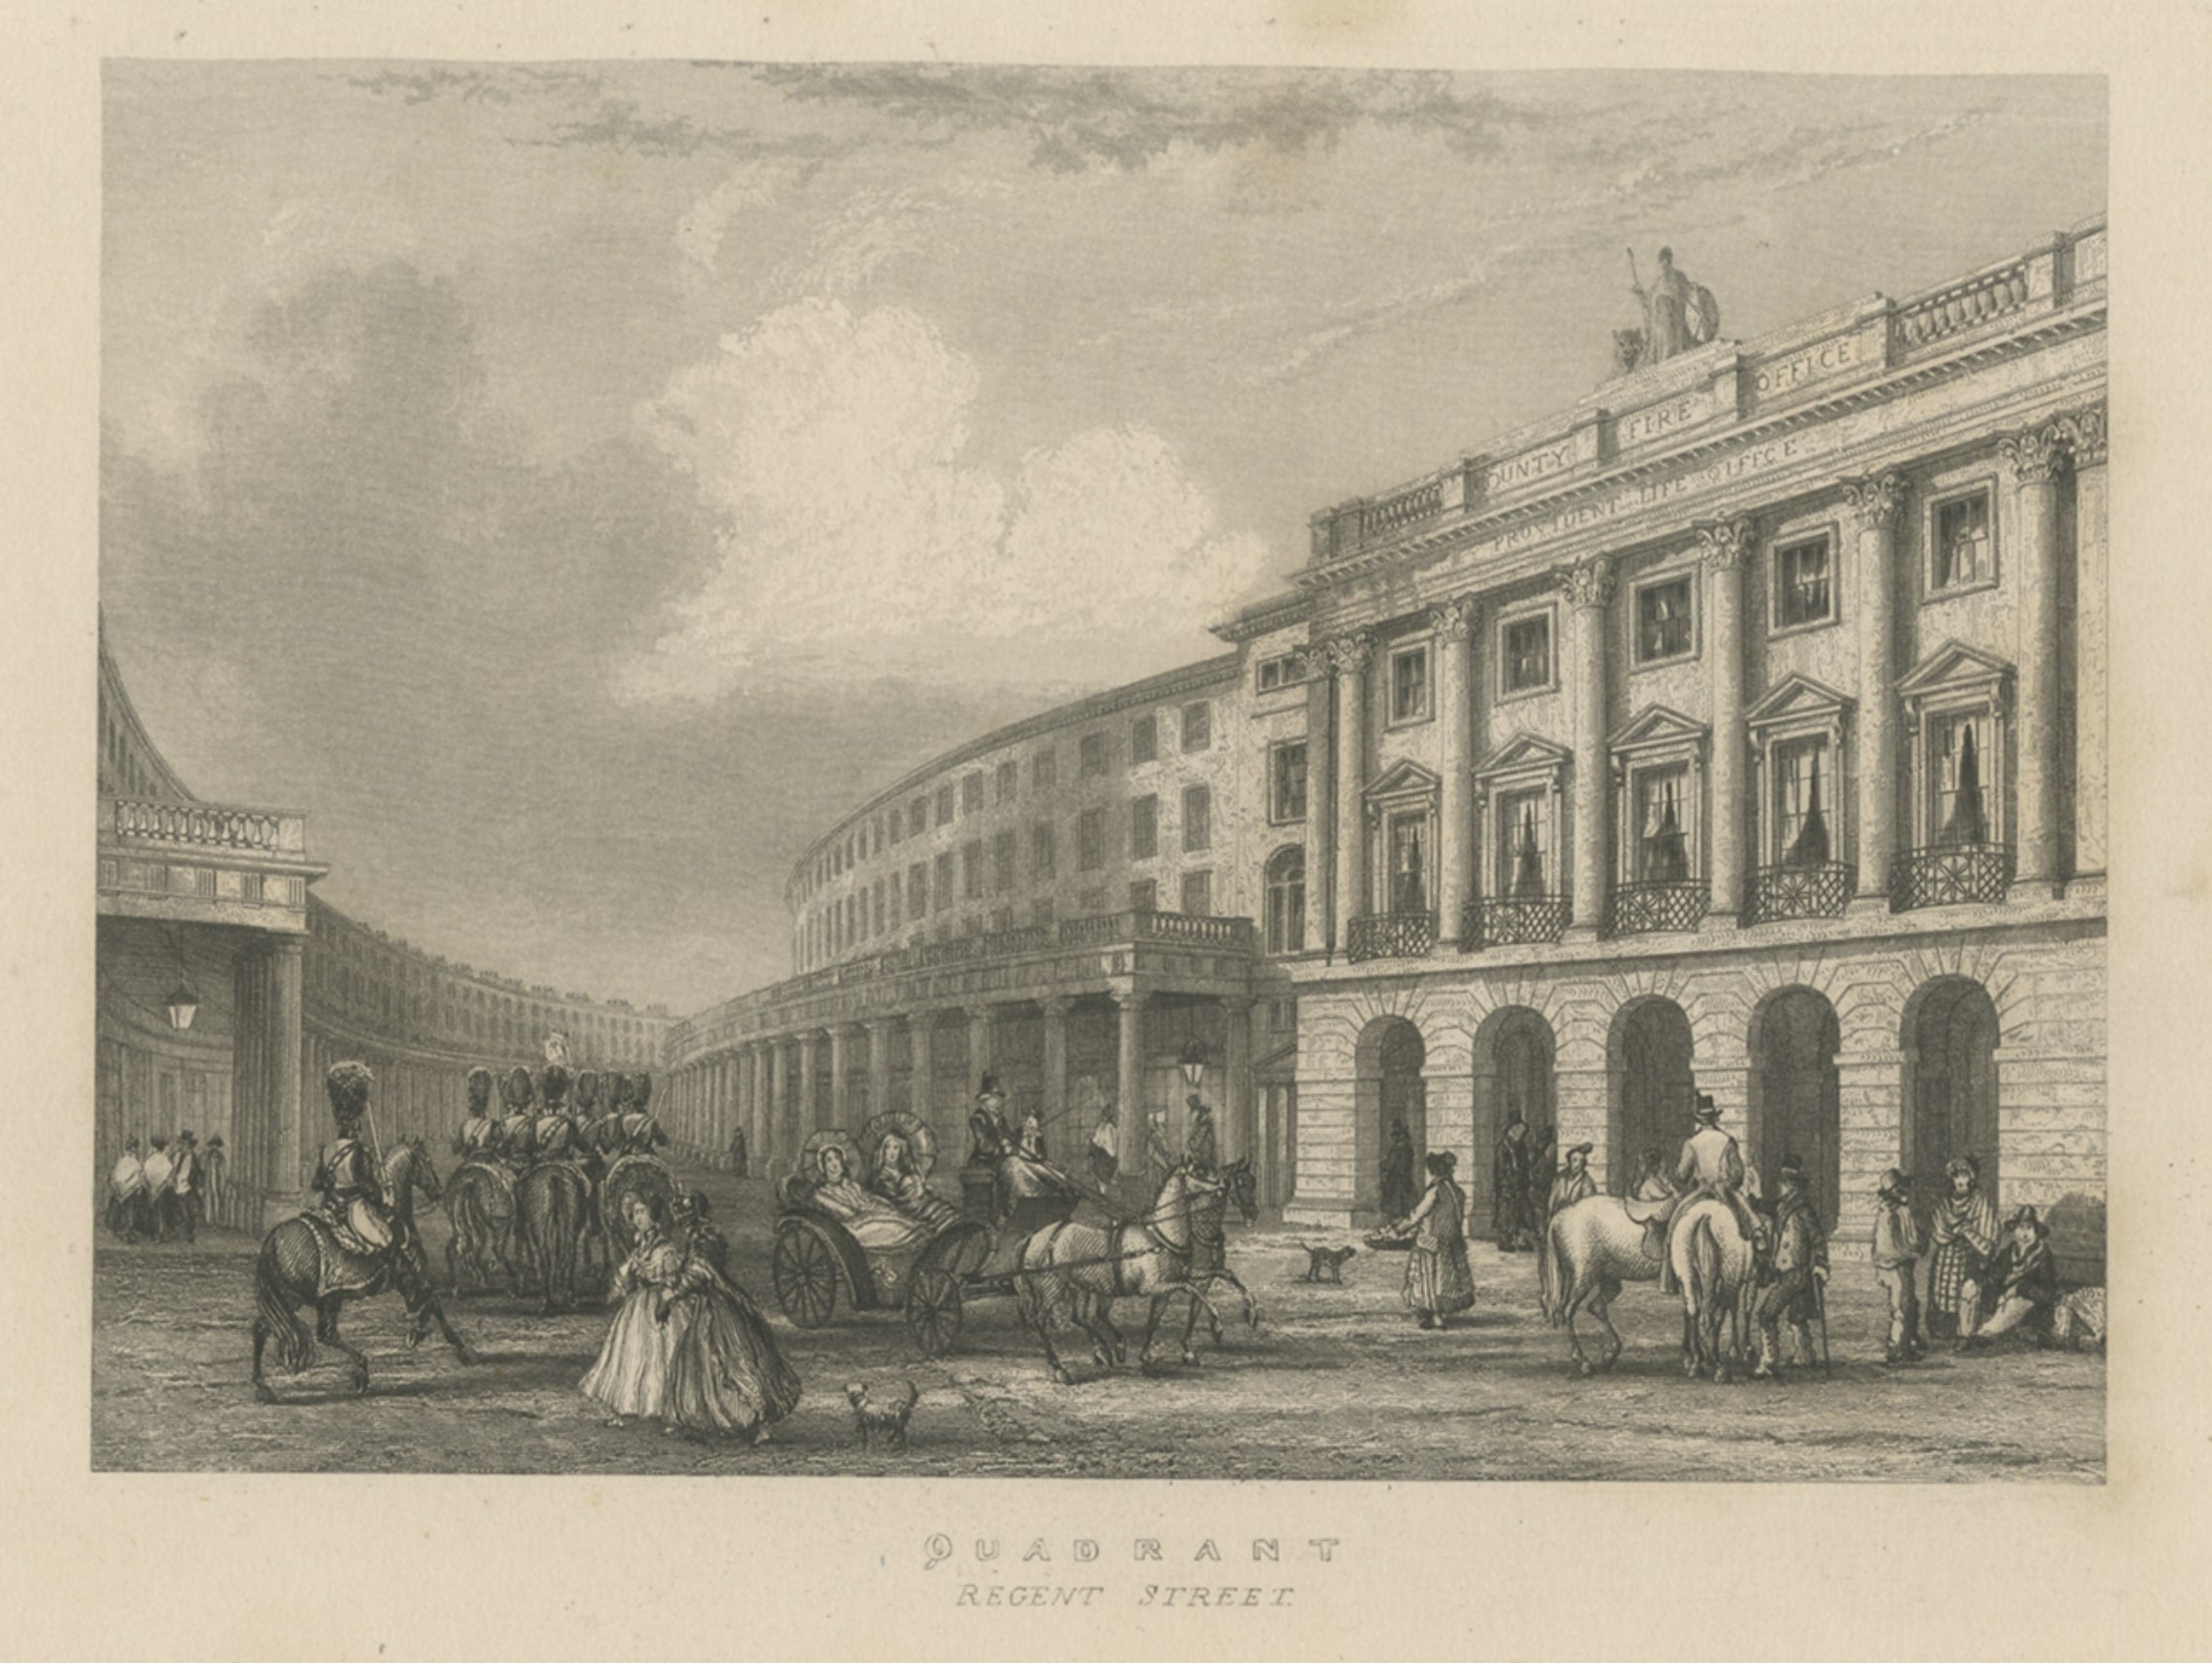 Antique Print of the Quadrant of Regent Street, London, c.1840